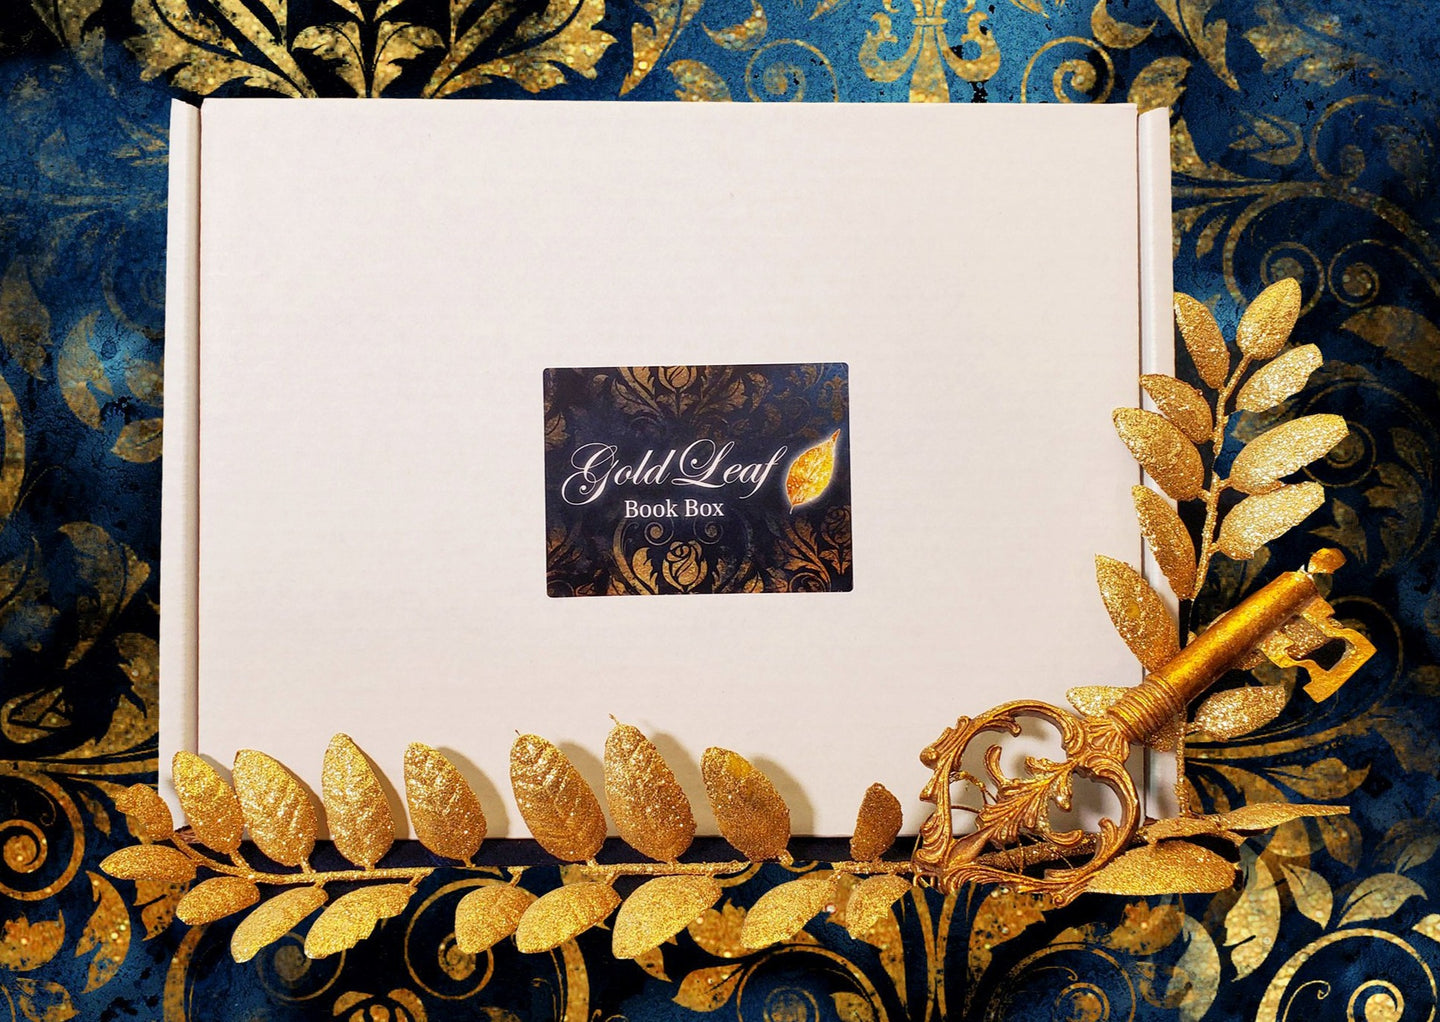 Gold Leaf Book Box Subscription